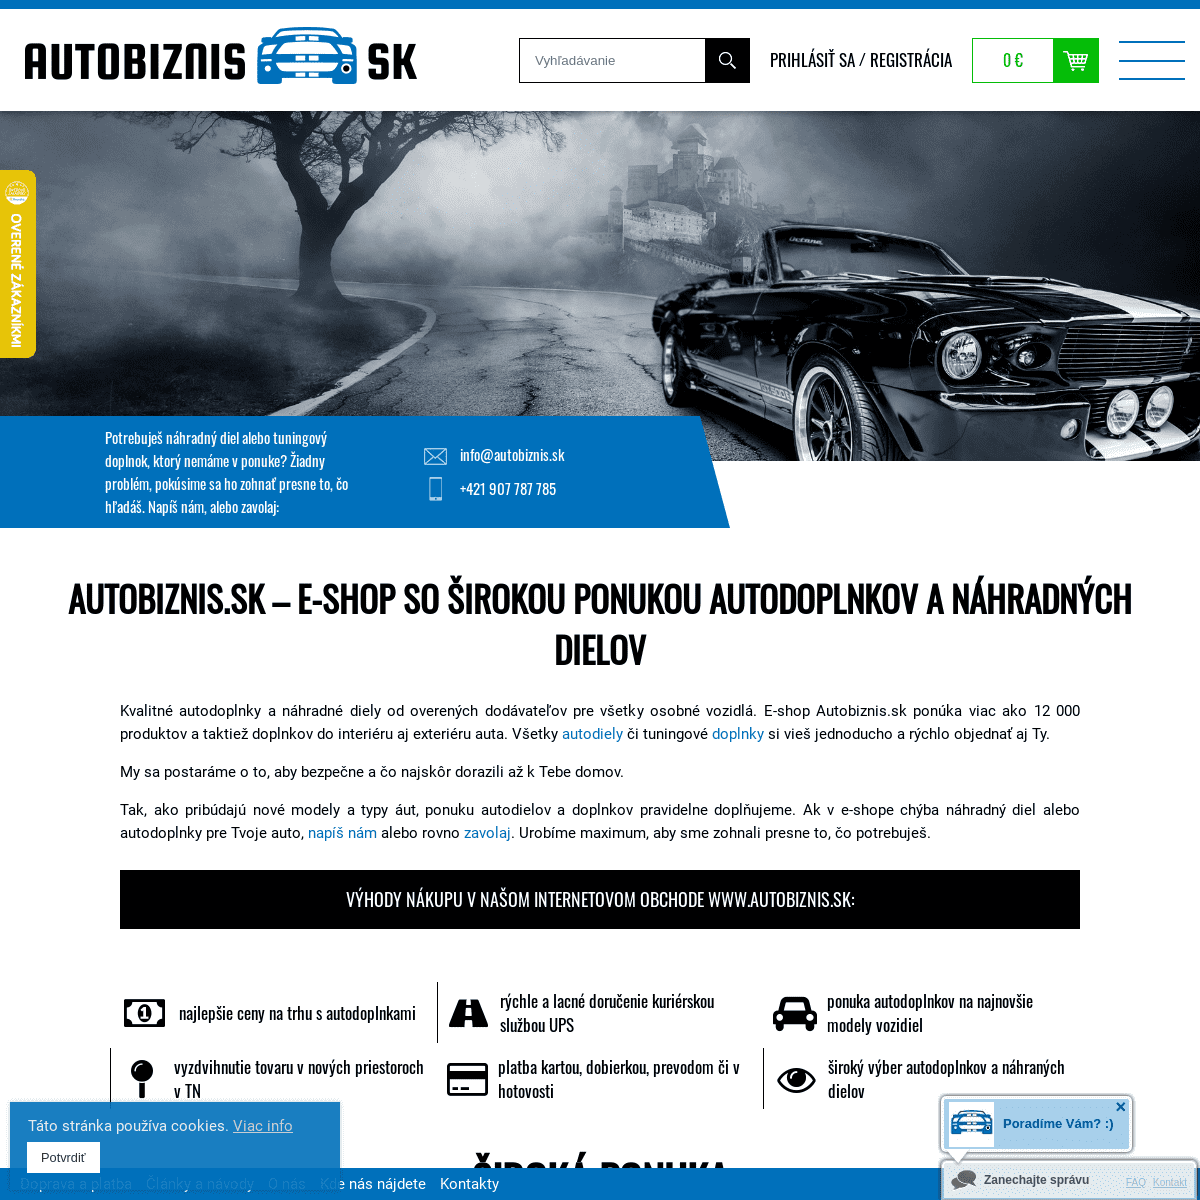 A complete backup of autobiznis.sk